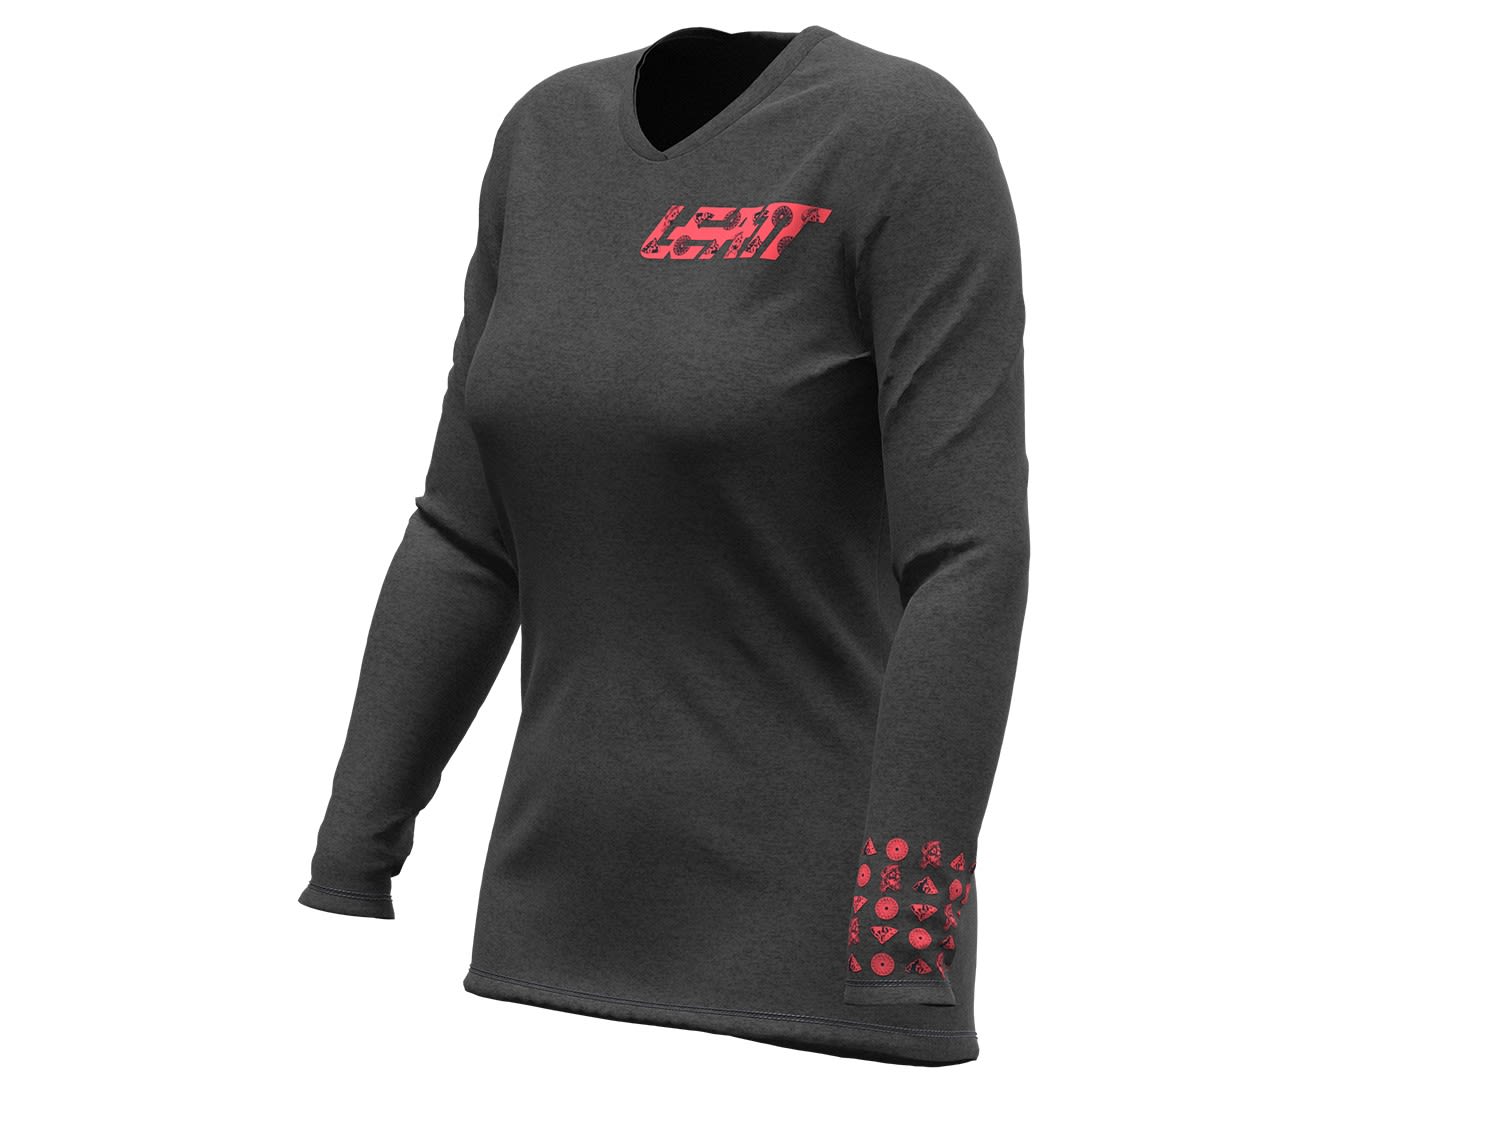 Leatt MTB Gravity 2-0 Jersey Grau- Female Langarm-Shirts- Grsse M - Farbe Black unter Leatt